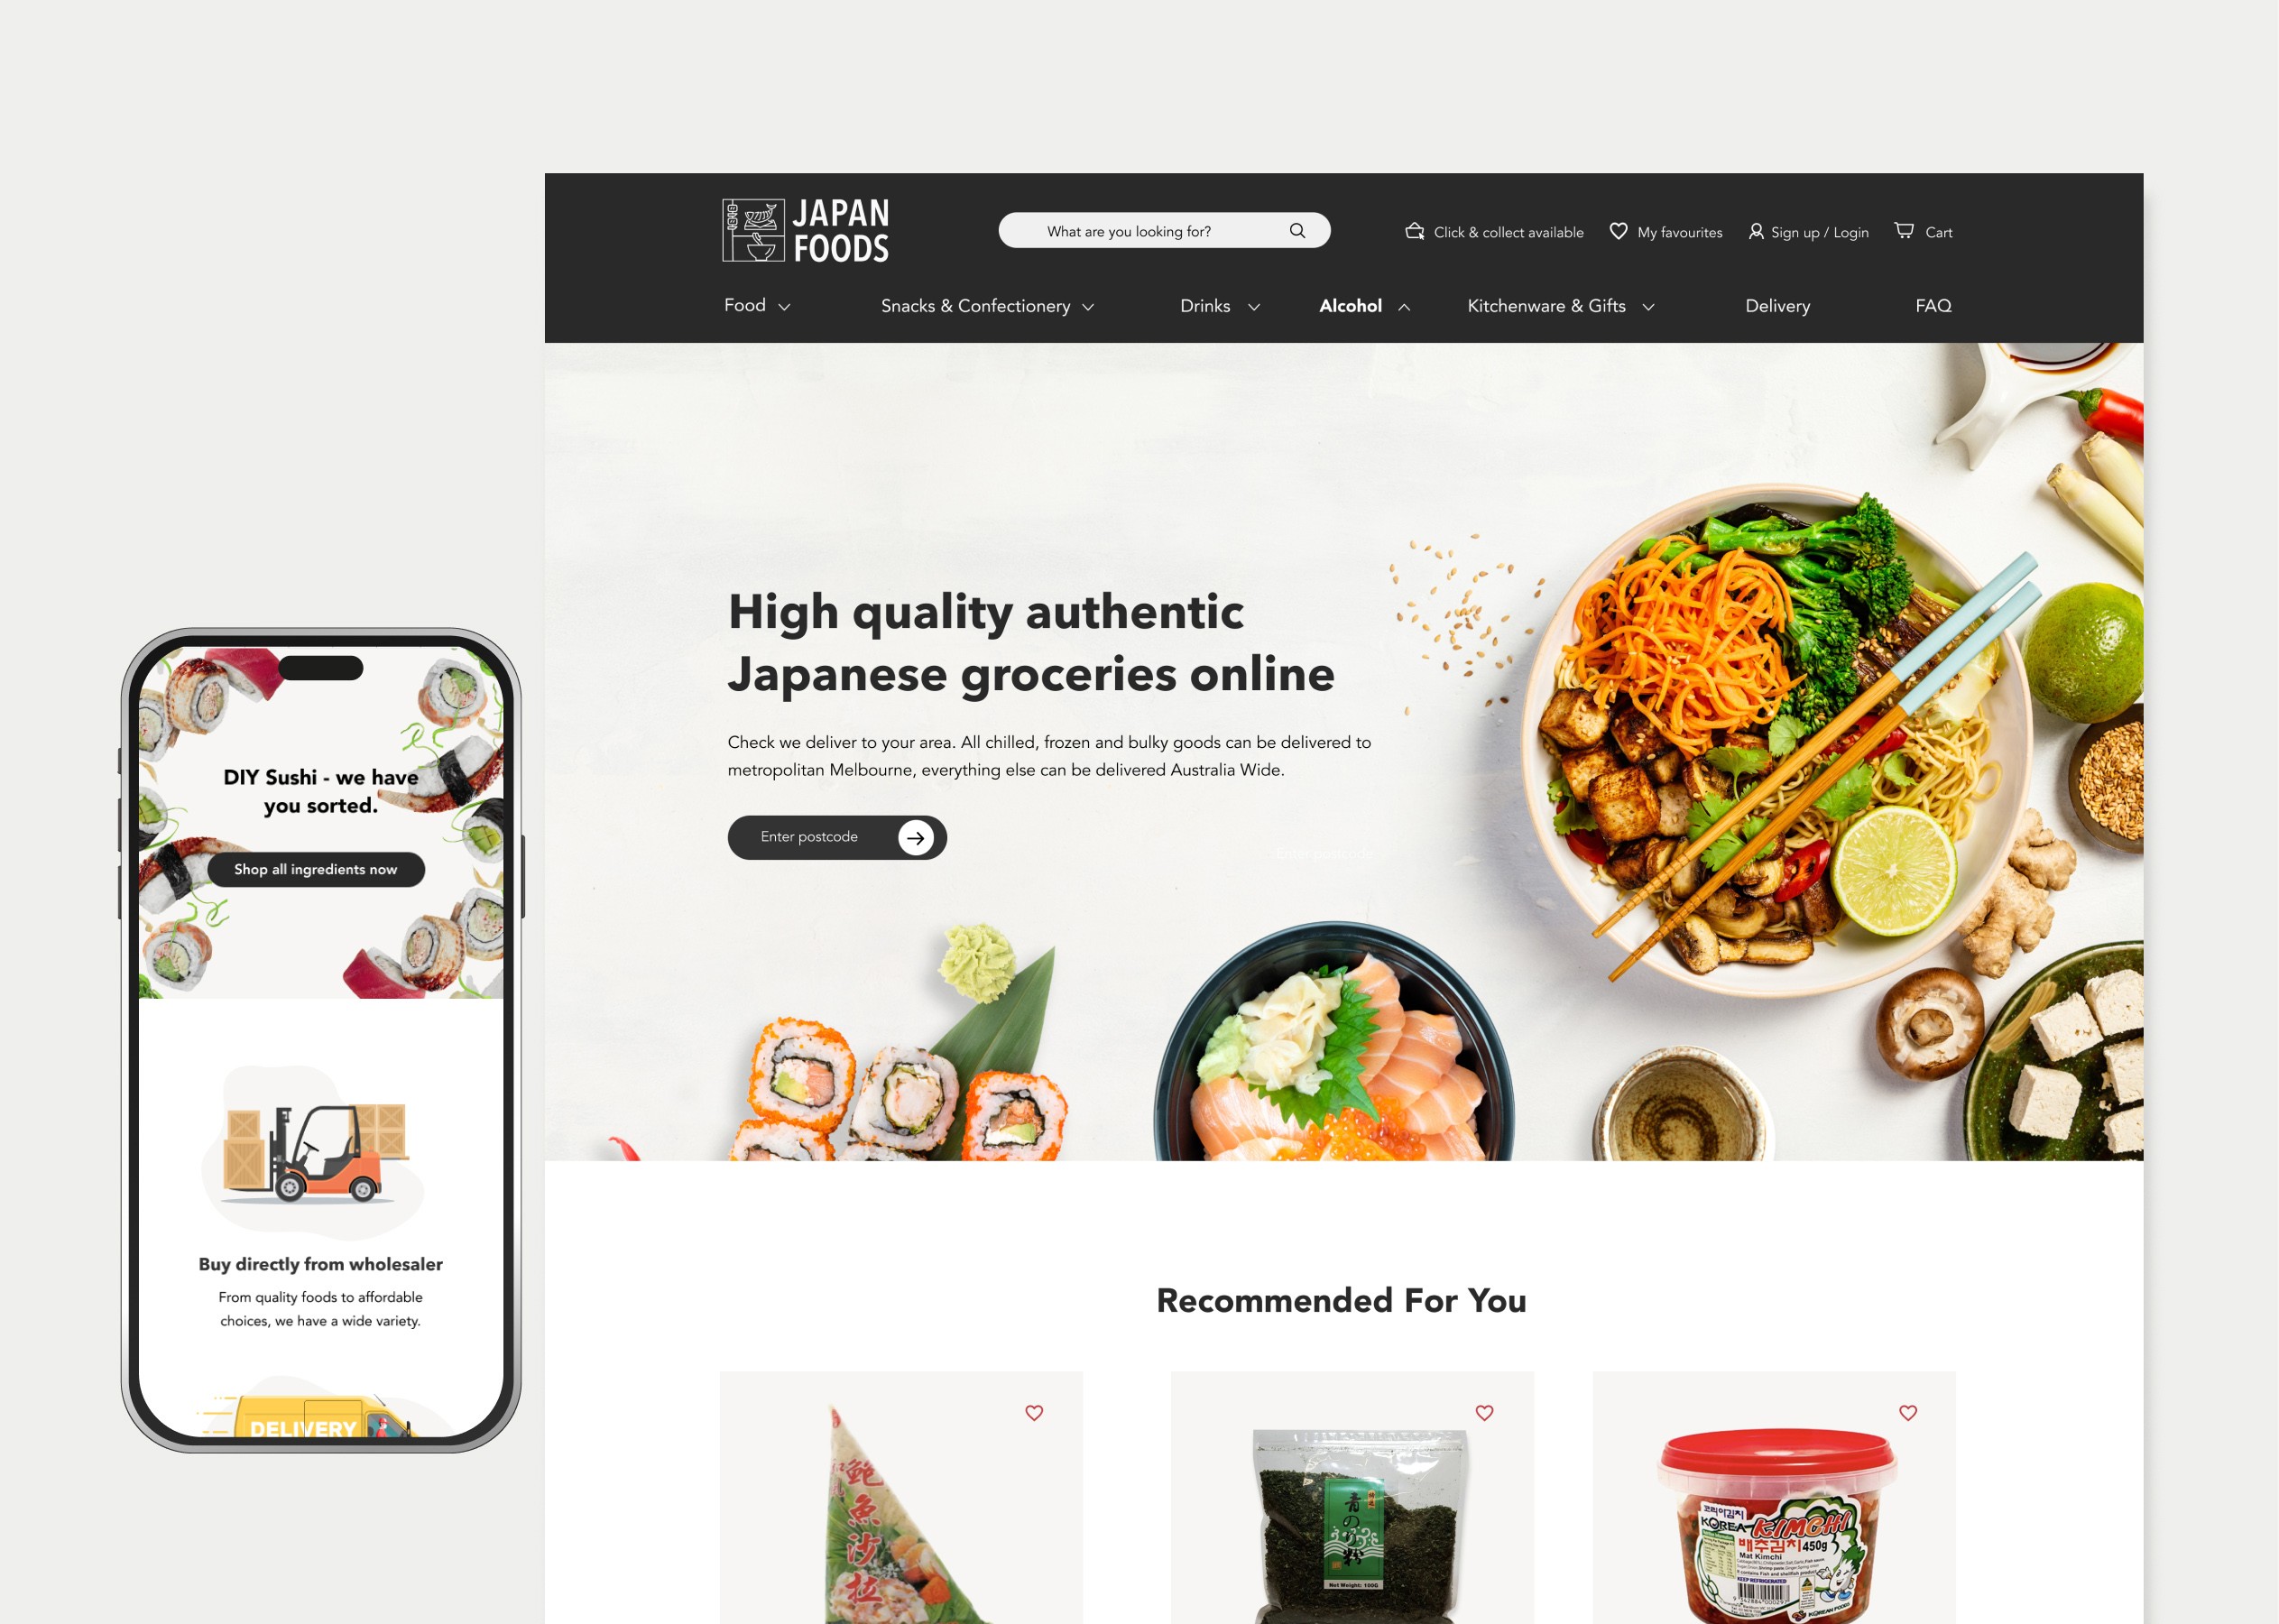 Japan Foods website and mobile app